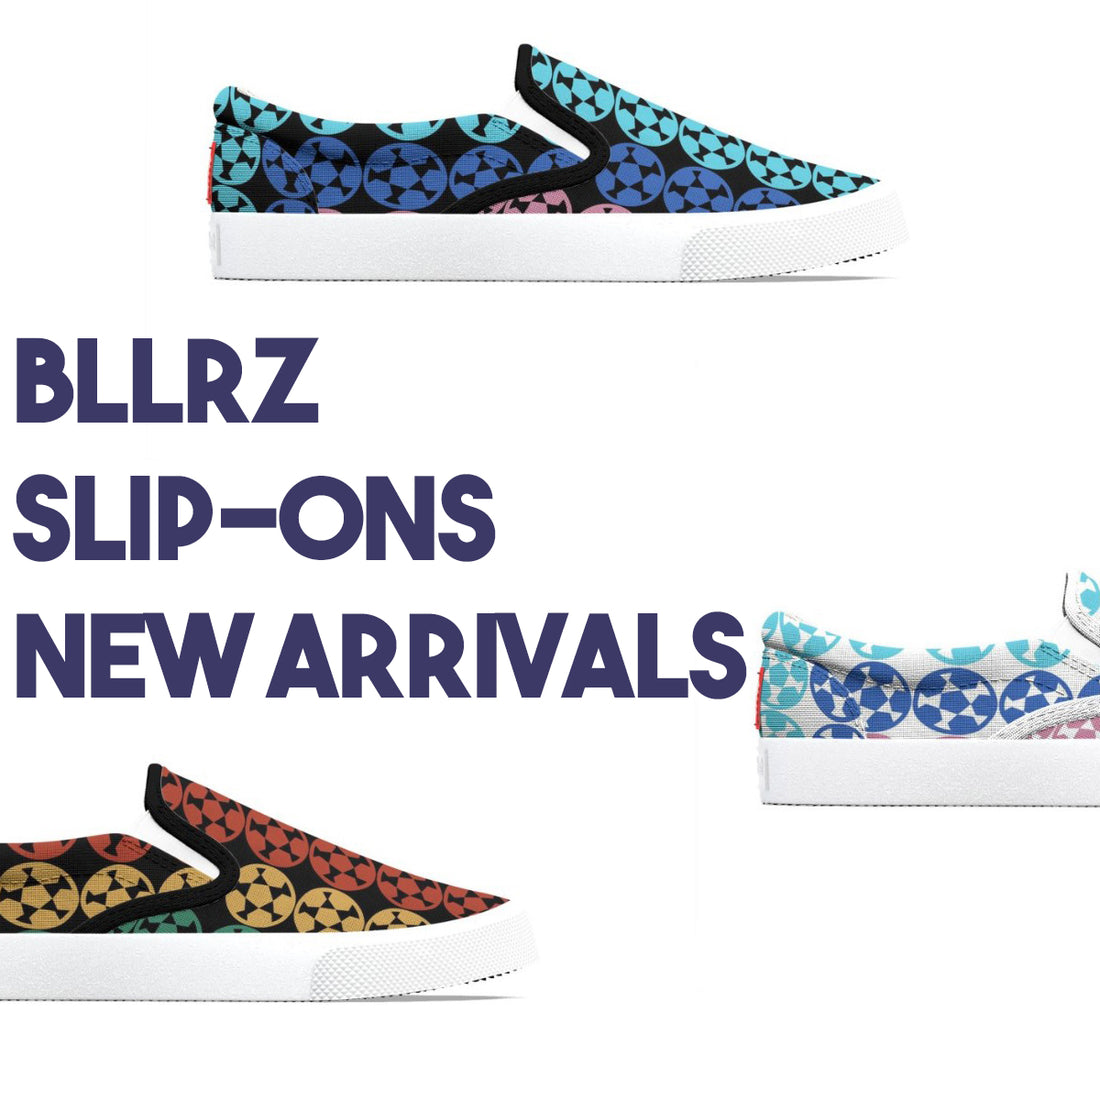 New Arrival: New Bllrz Slip-On Colorways